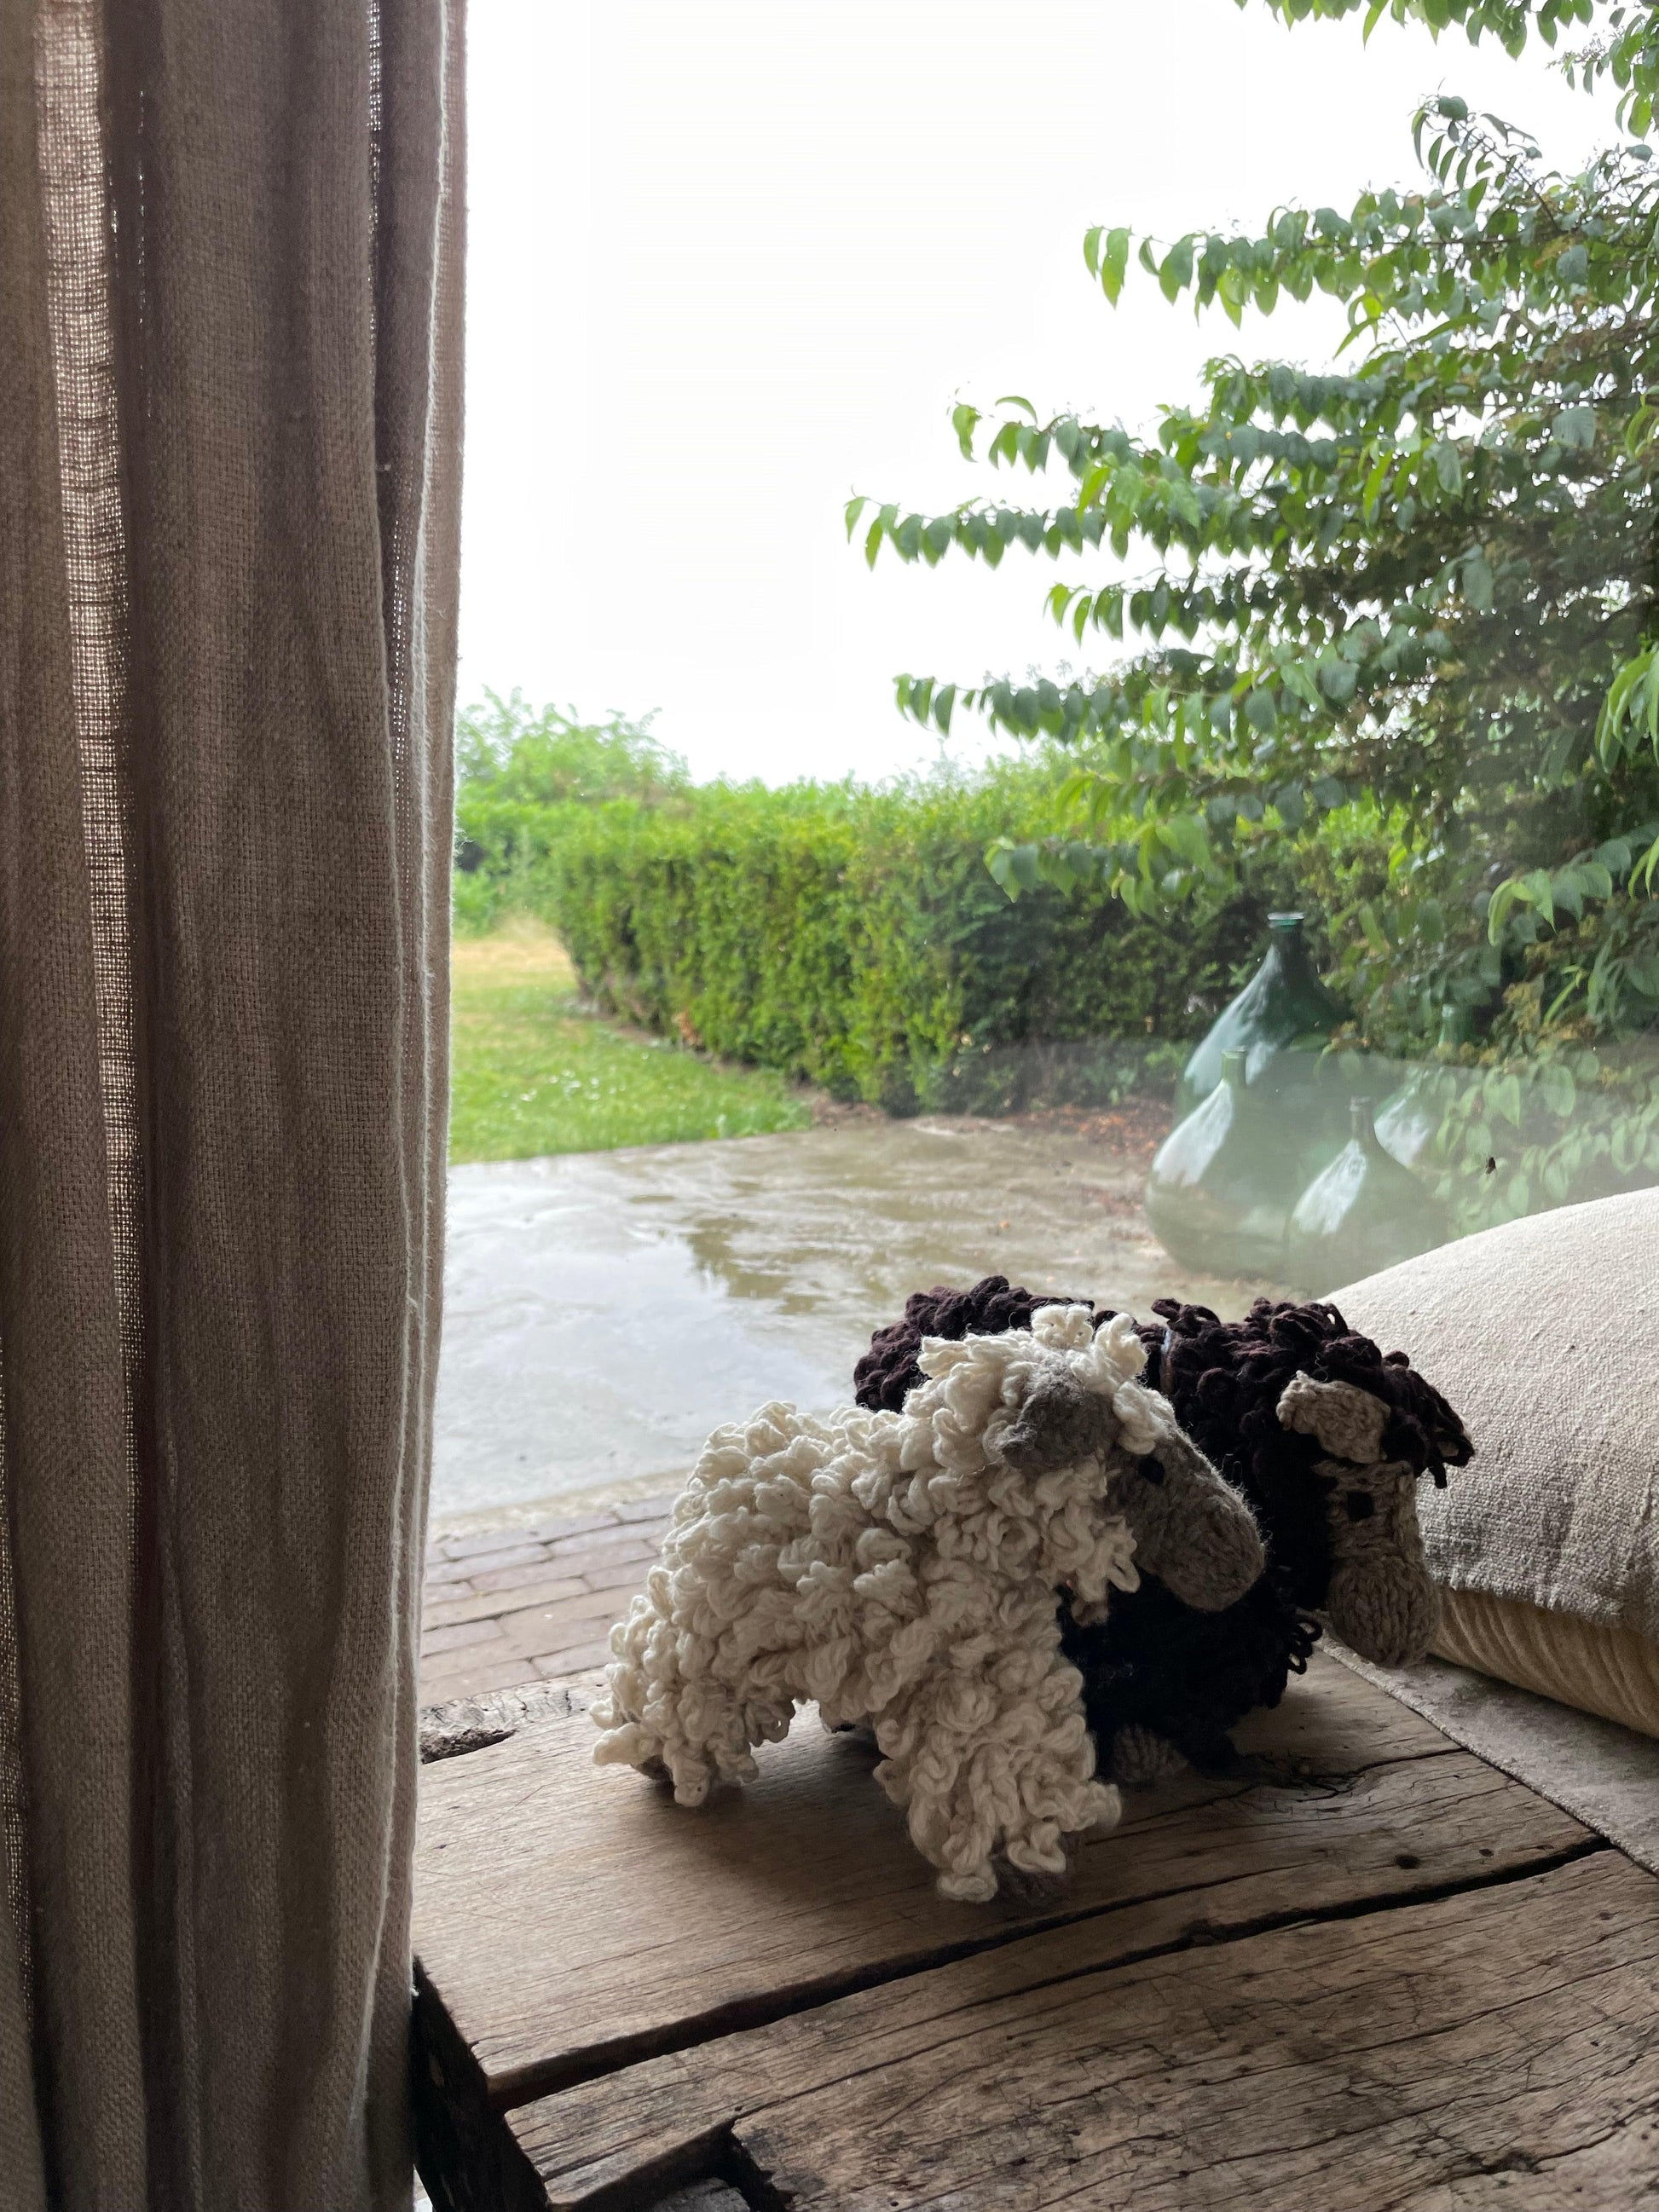 Doudou mouton en laine bio - fait main - MILTON - Studio Matongé